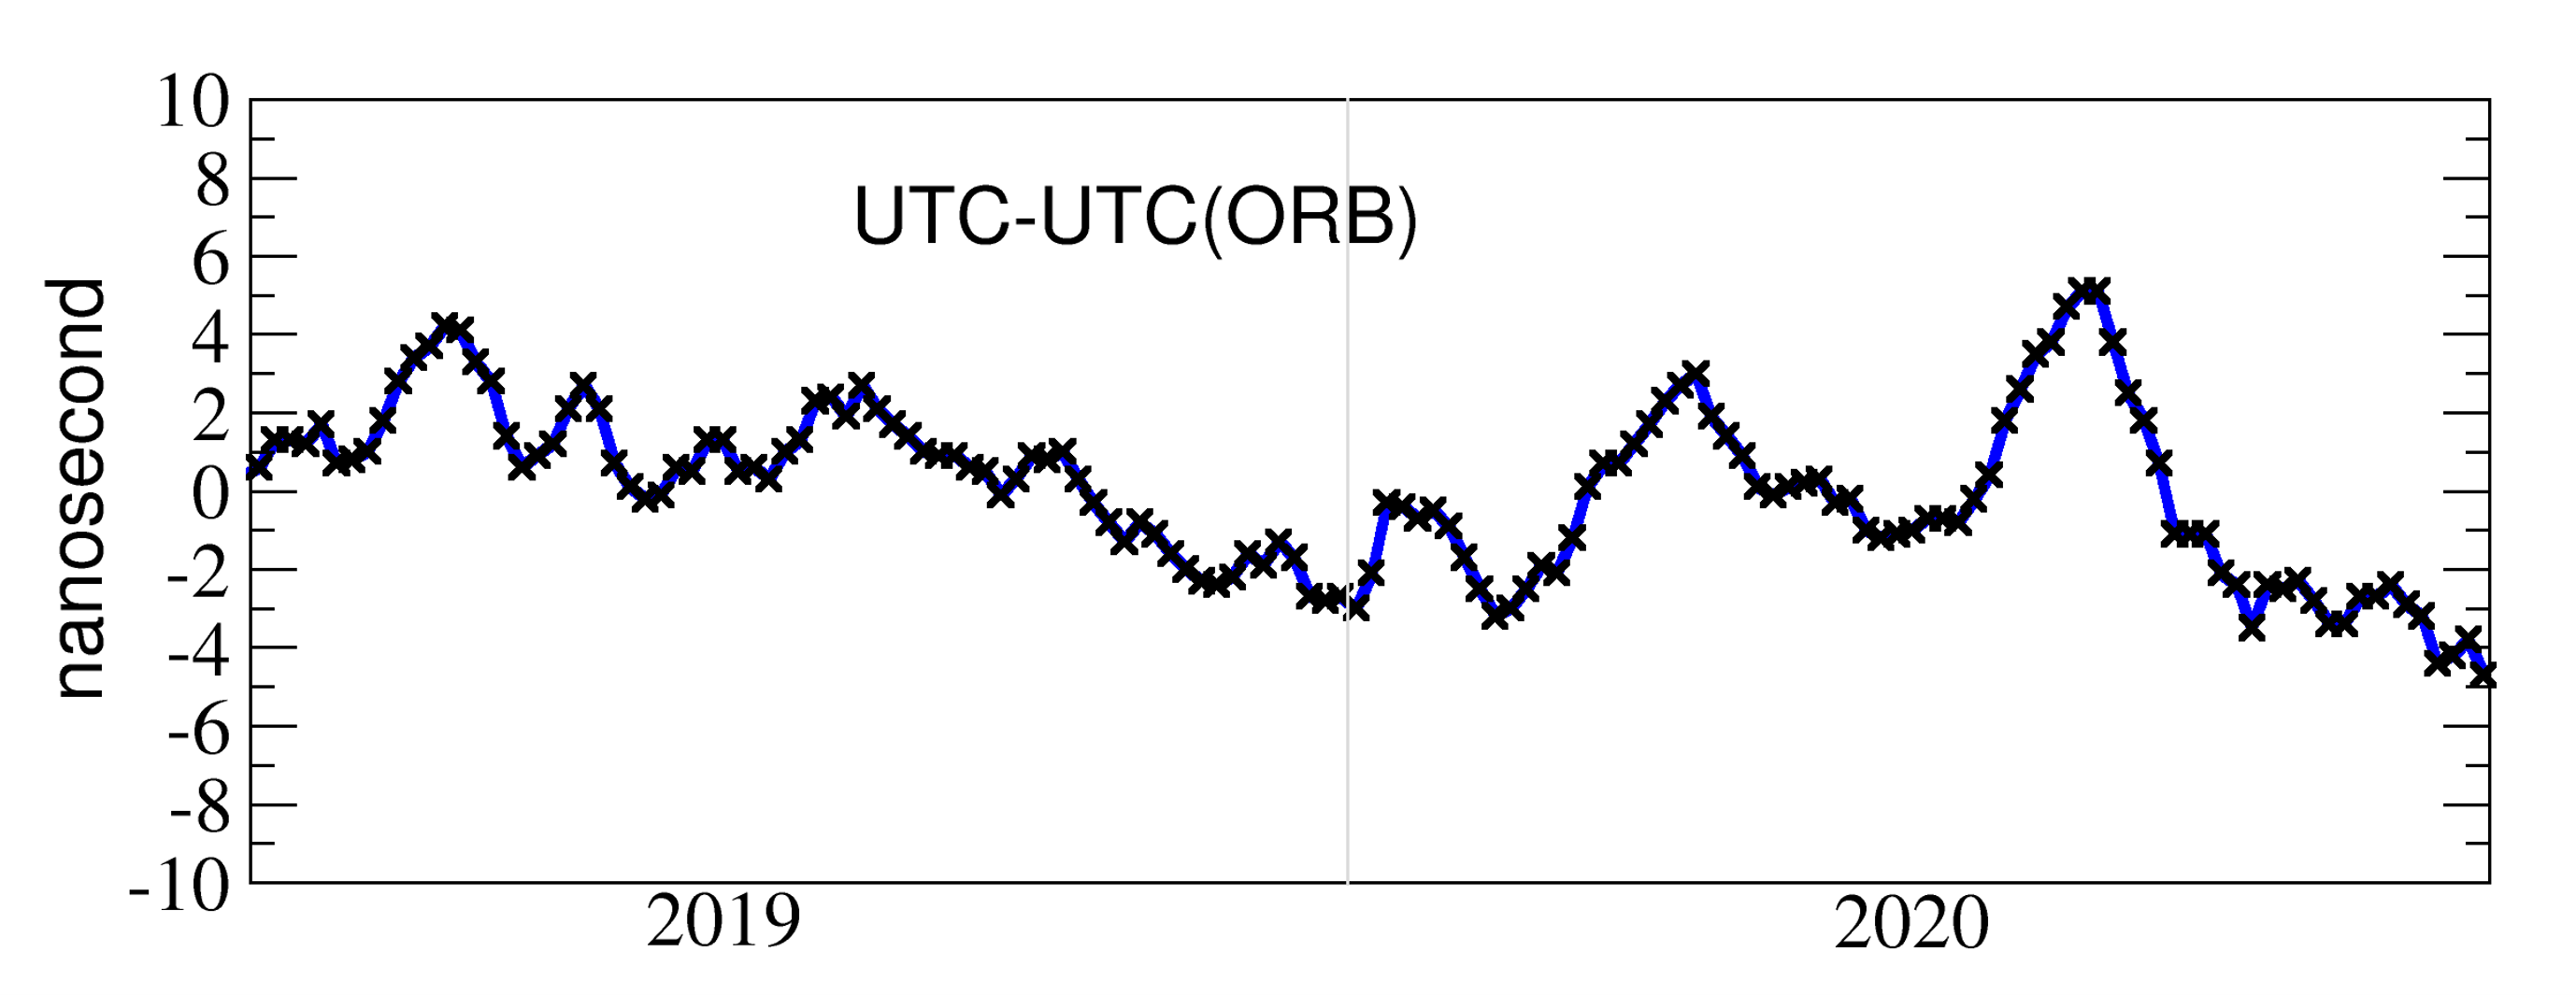 Verschil tussen UTC et UTC(ORB)